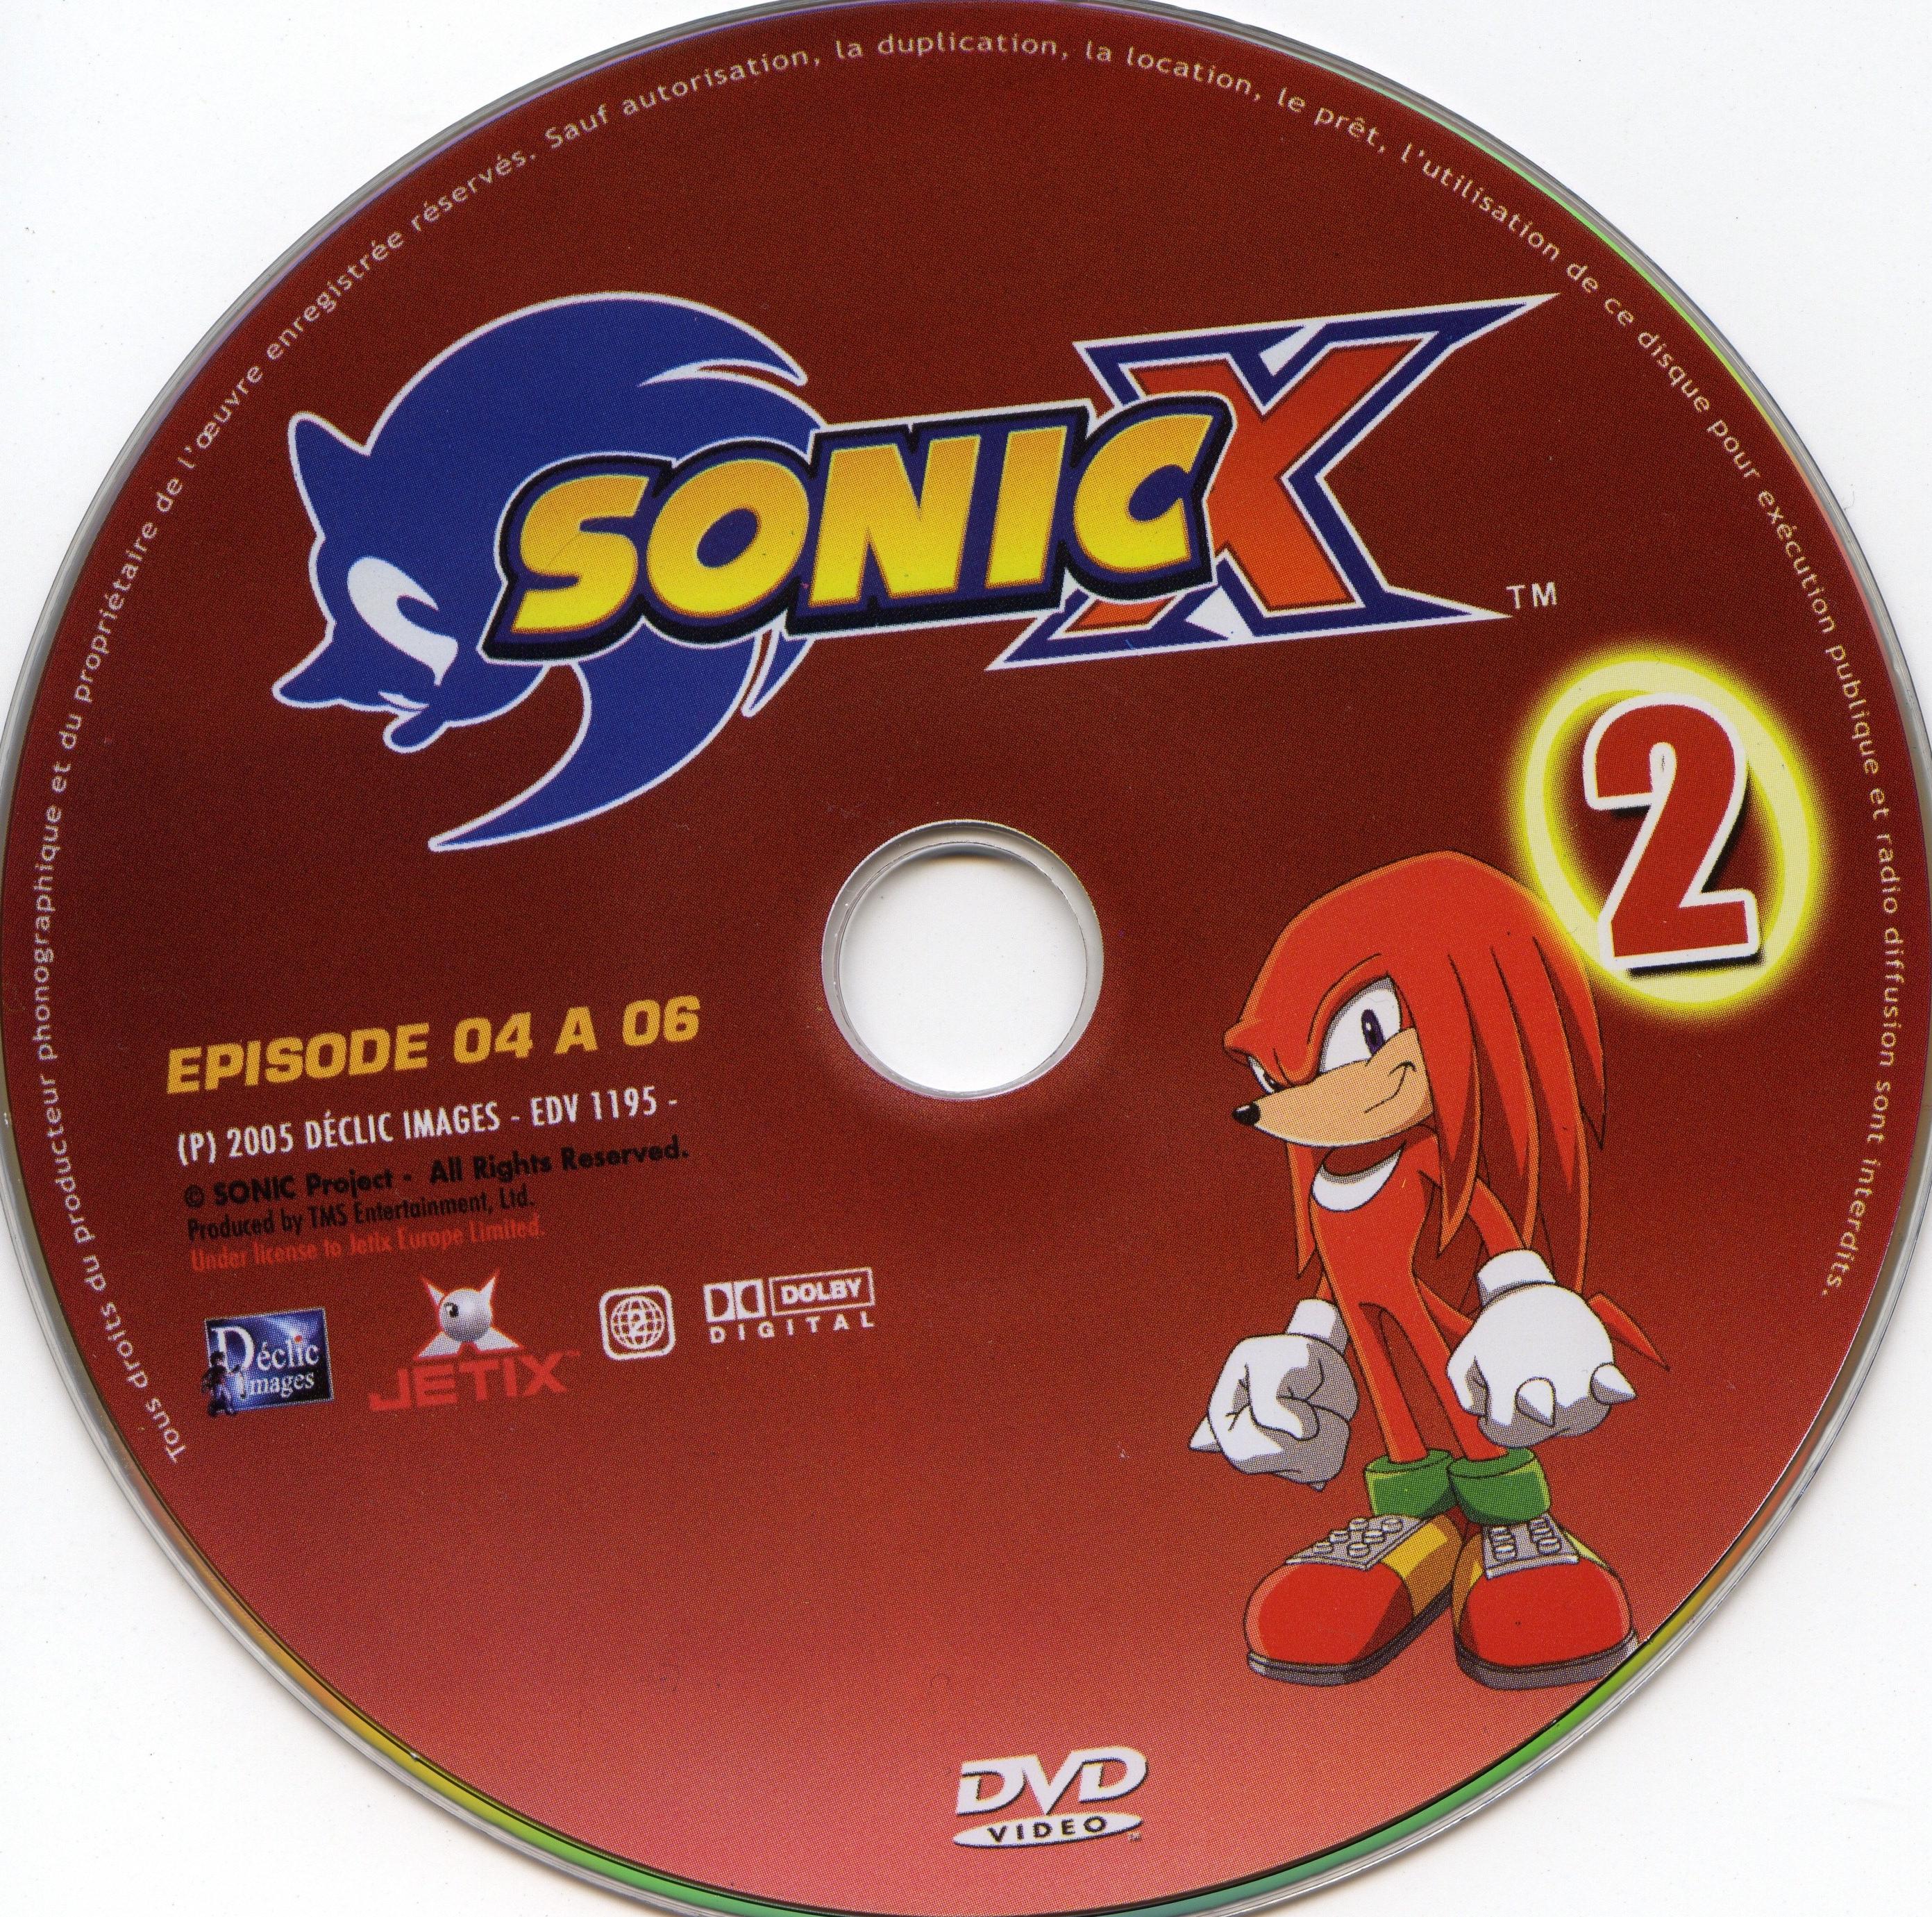 Sonic X vol 02